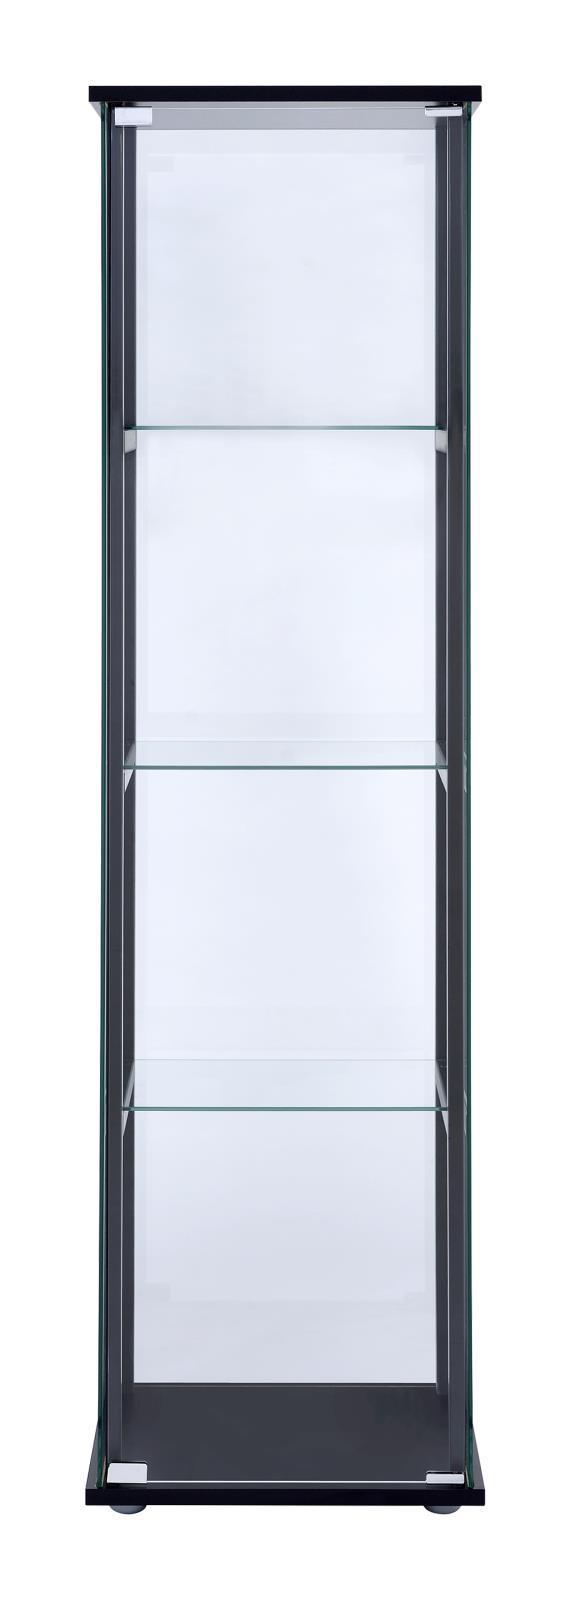 4-shelf Glass Curio Cabinet - Black-Washburn's Home Furnishings